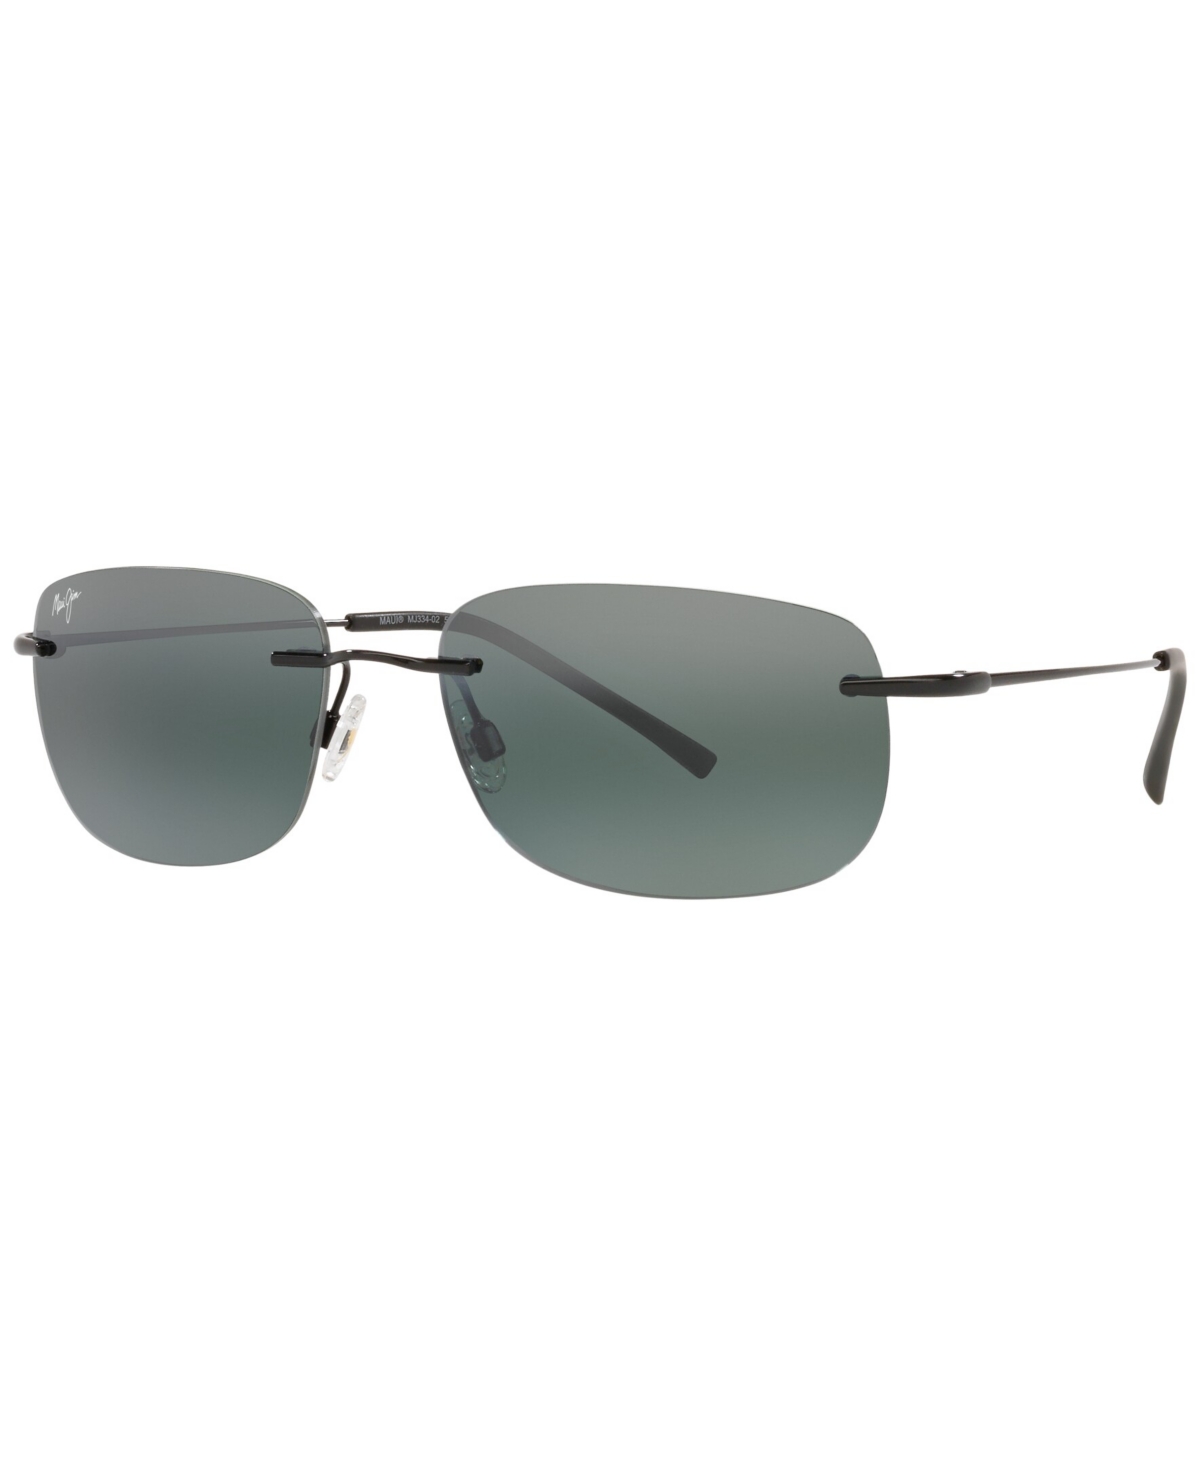 Unisex Polarized Sunglasses, MJ000670 Ohai 59 - Black Matte